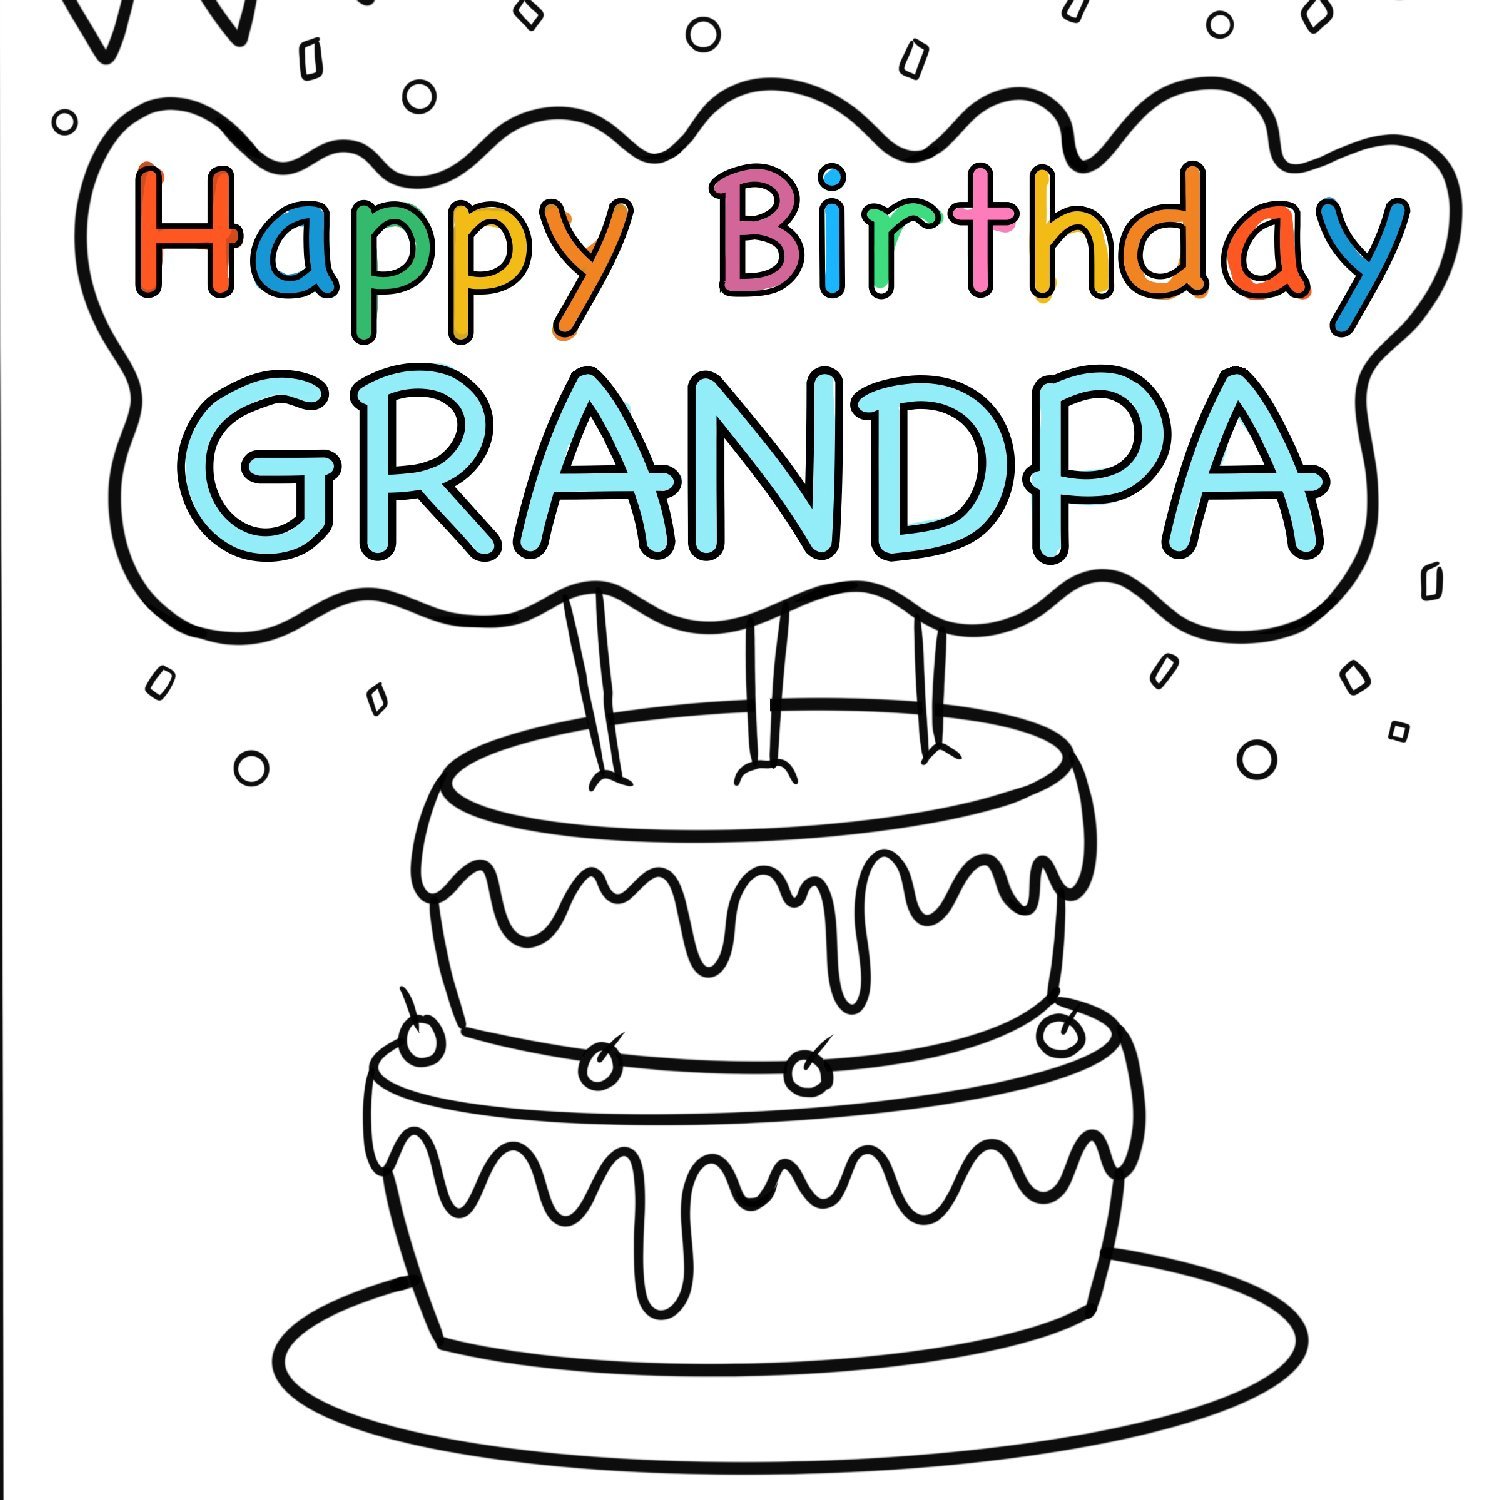 Happy birthday grandpa coloring page free printable